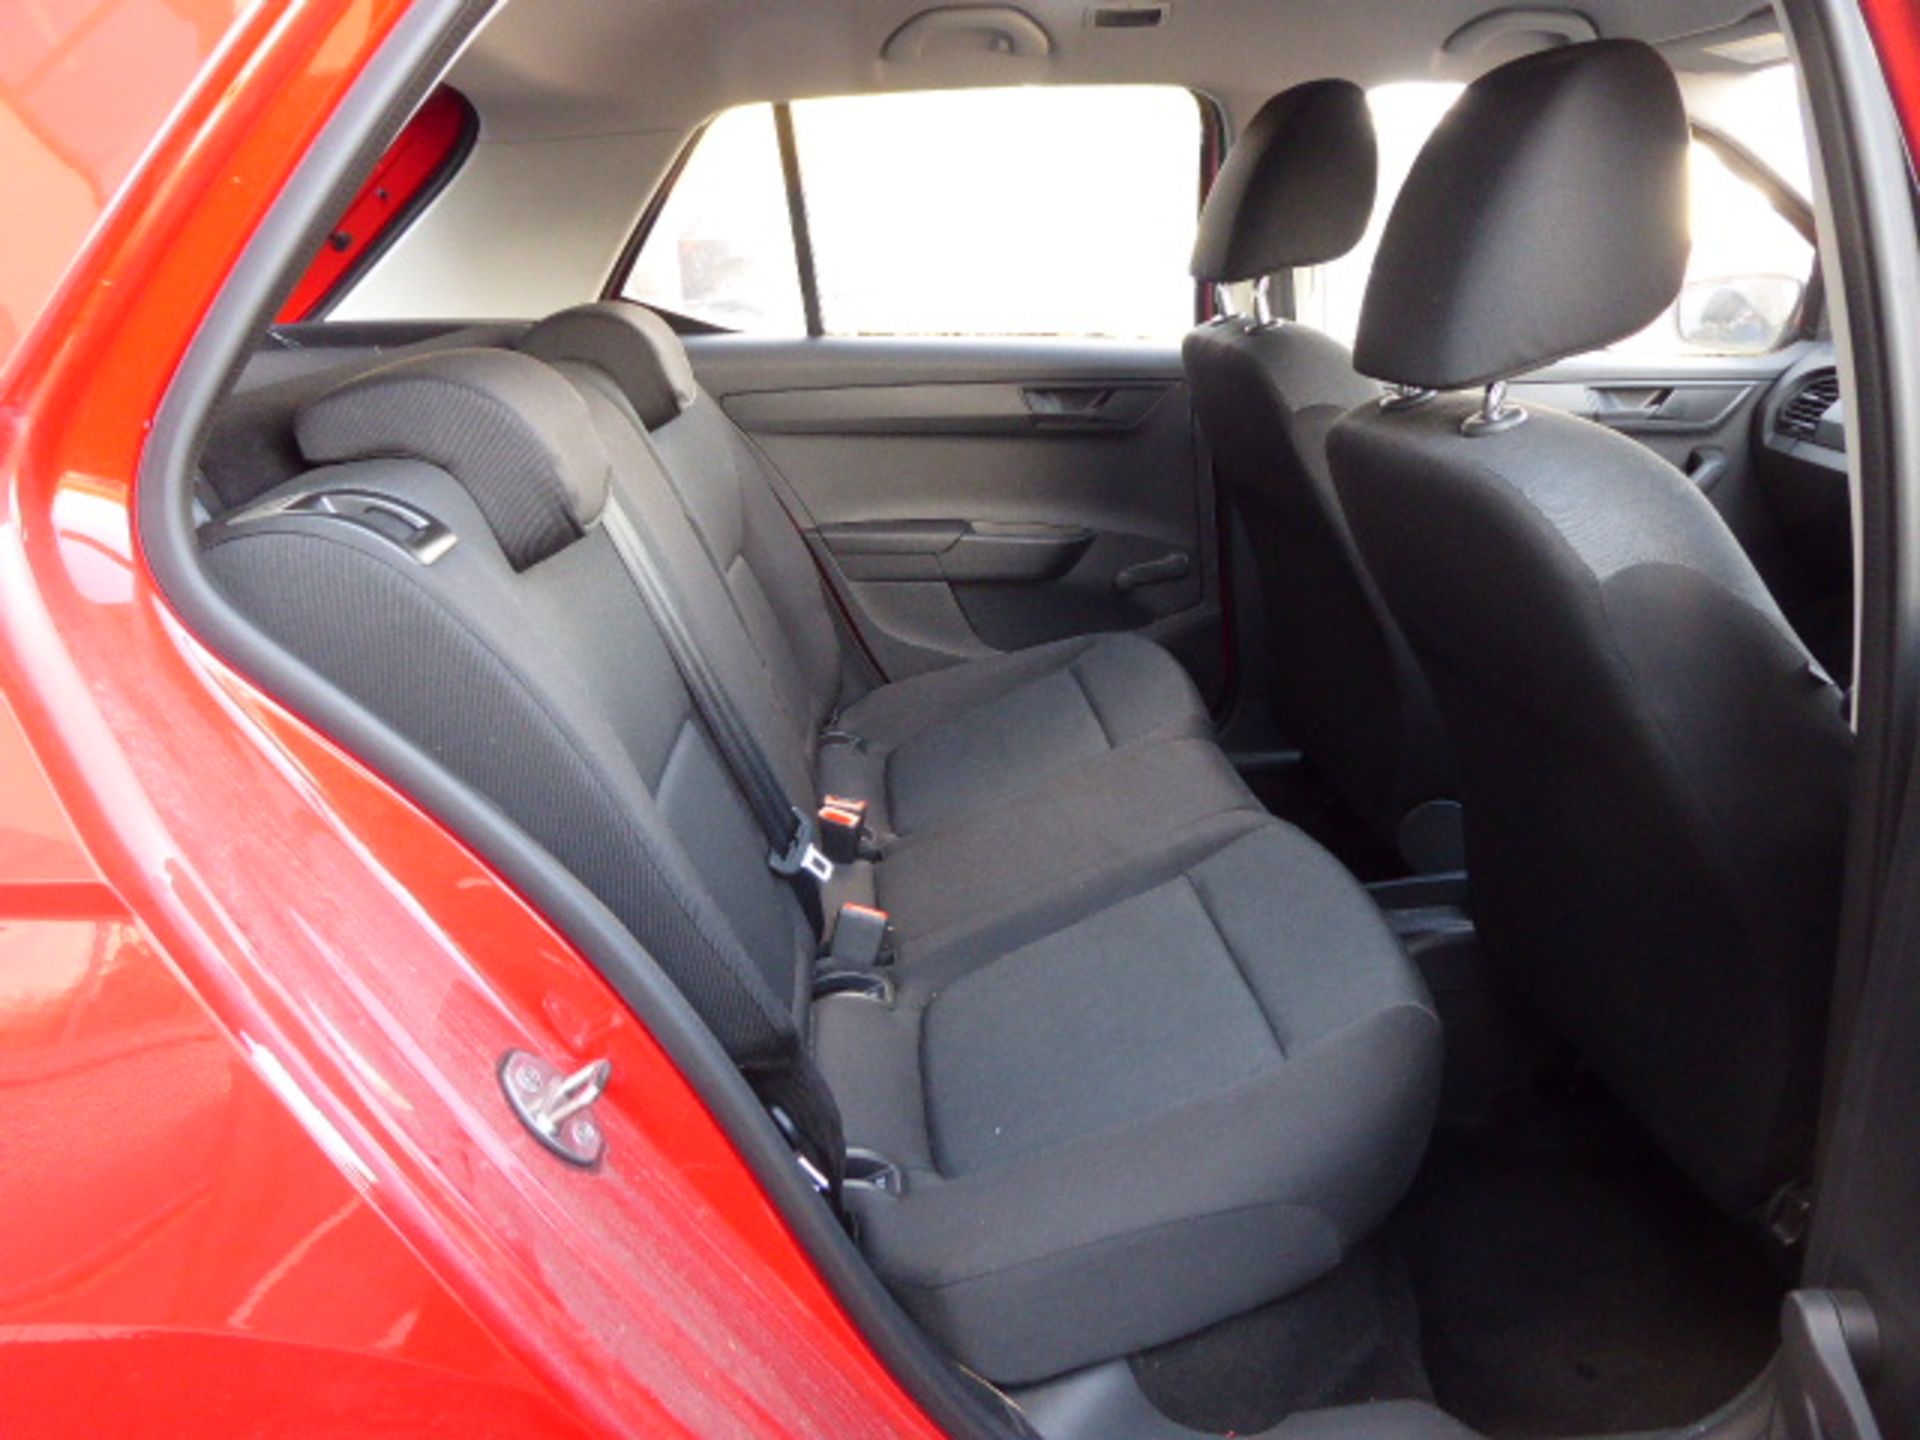 KM15 SVW (2015) Skoda Fabia S MPI, petrol, 5 door hatchback in red MOT: 4/19 (Expired) - Image 5 of 7